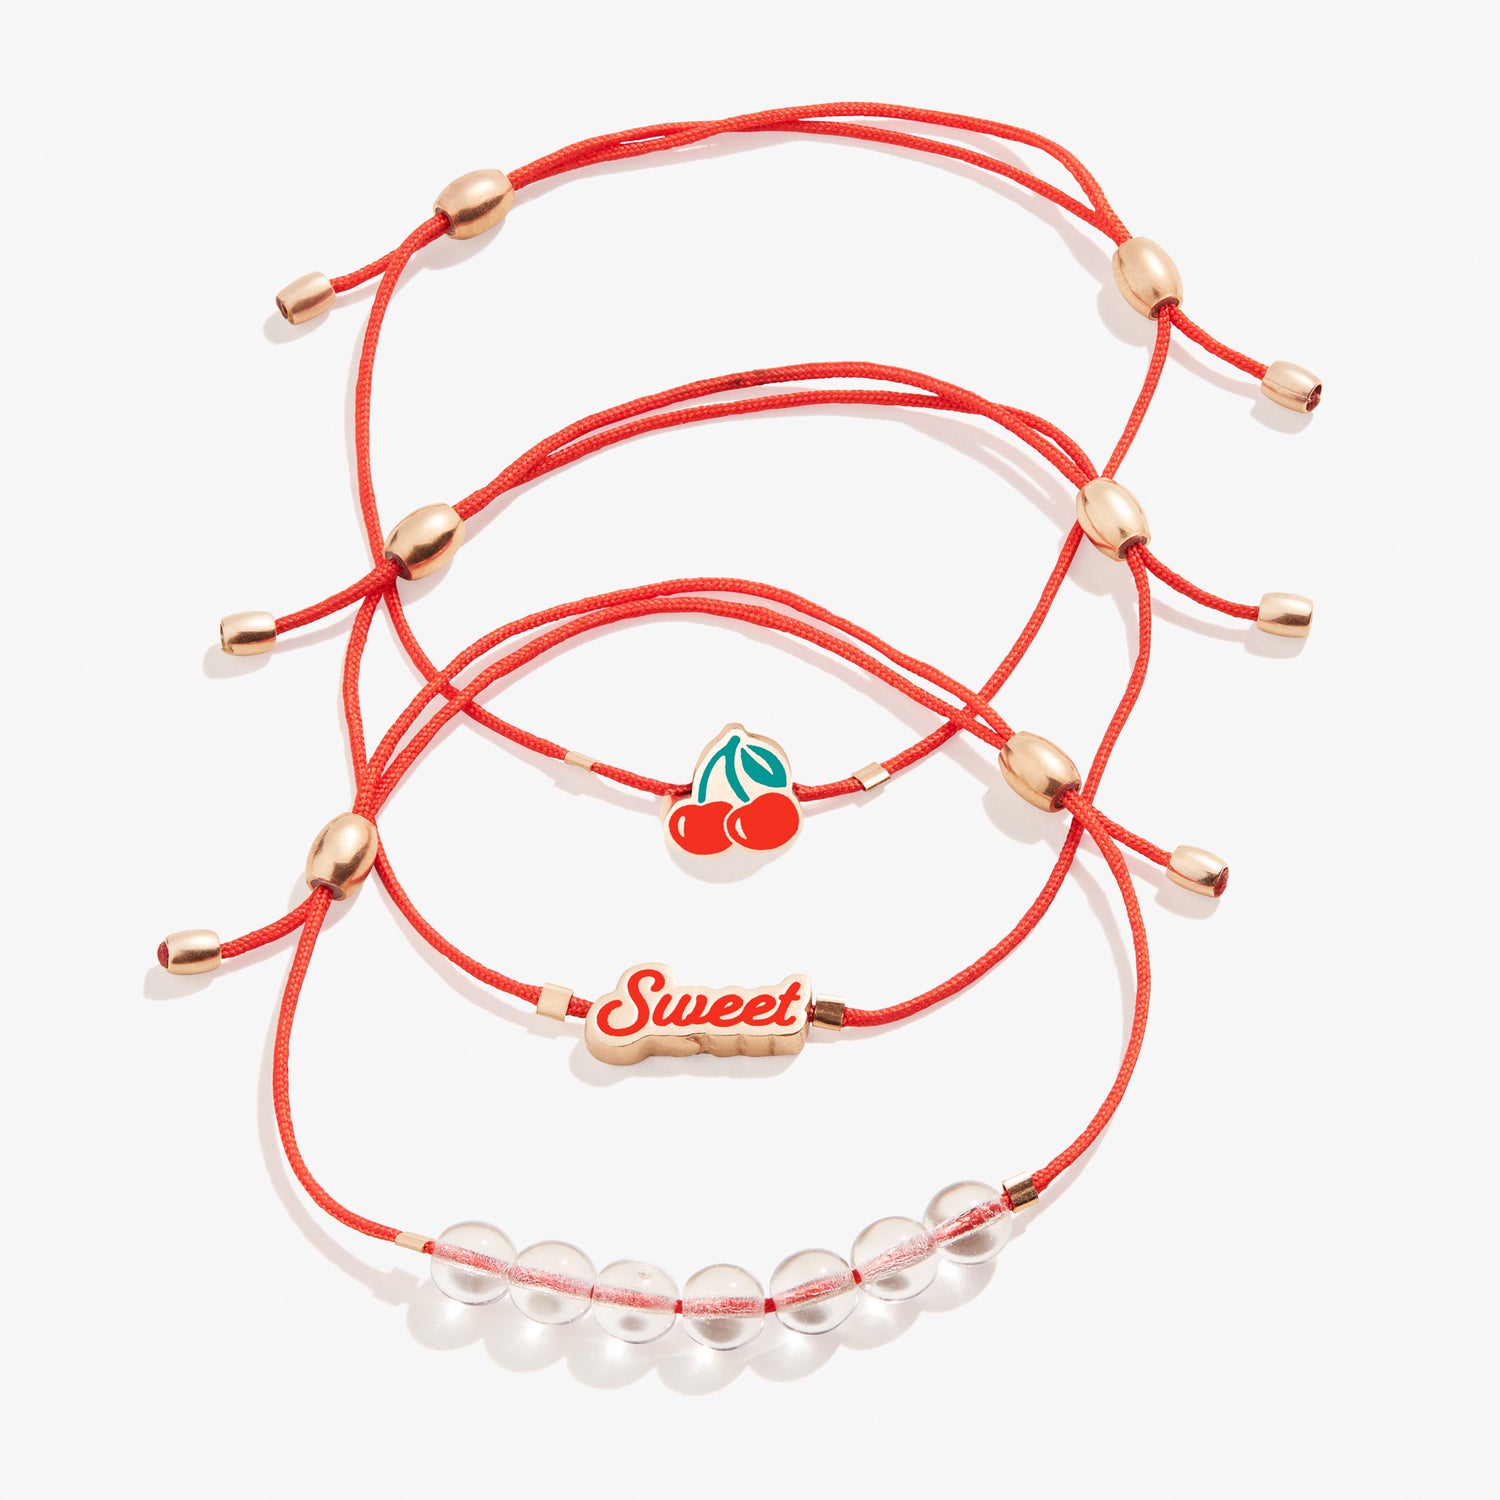 So Sweet Cherry Cord Bracelets, Set of 3